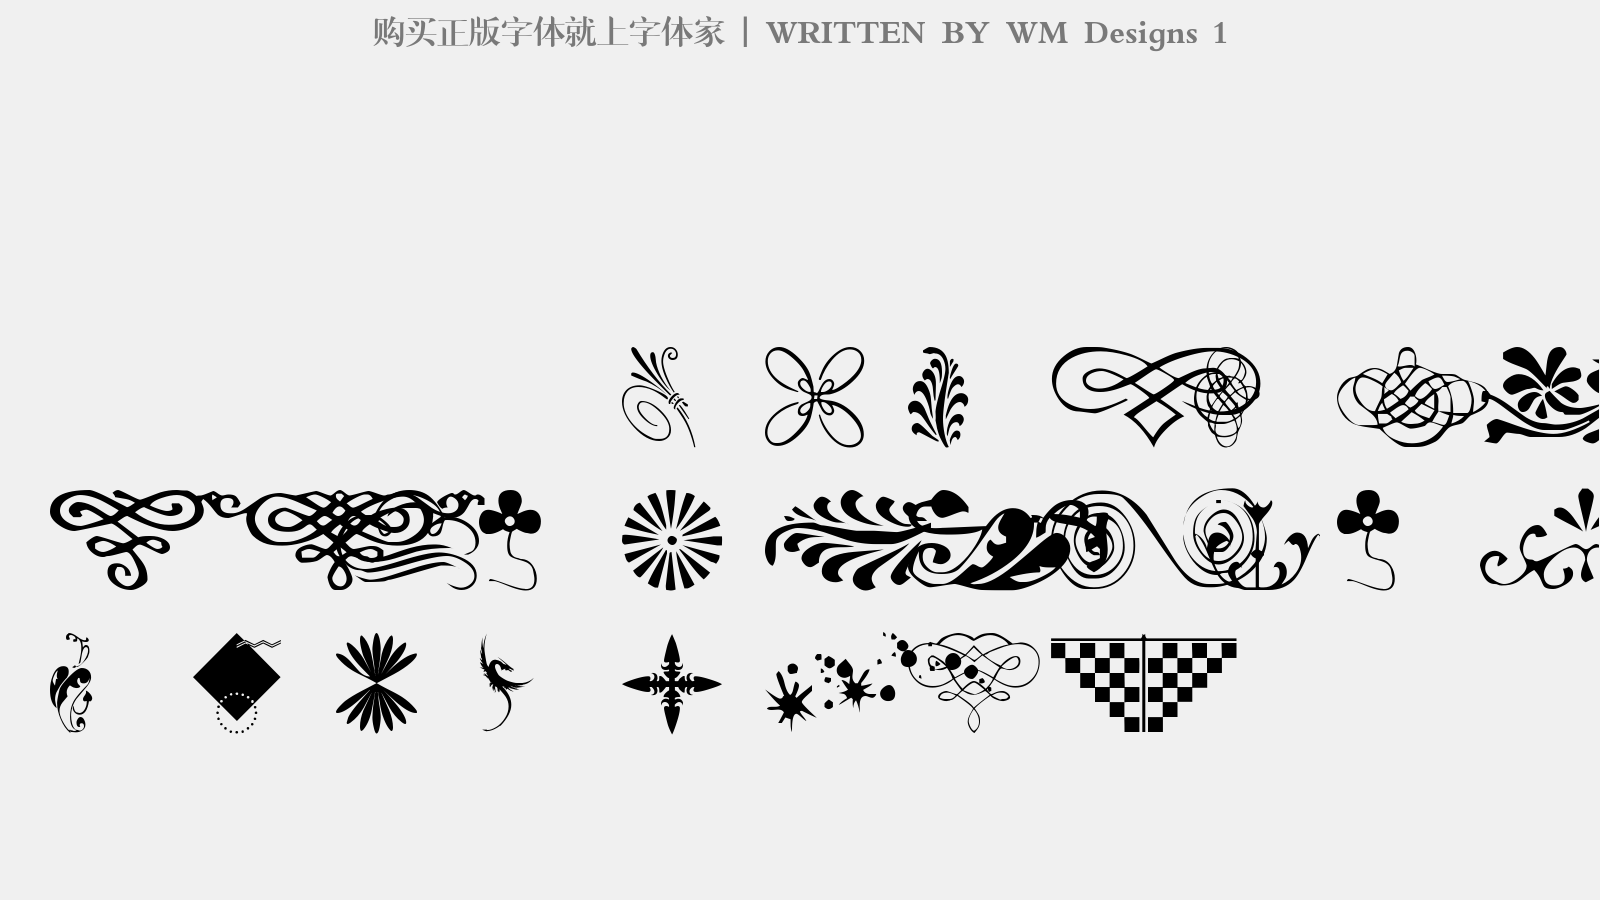 WM Designs 1 - 大写字母/小写字母/数字